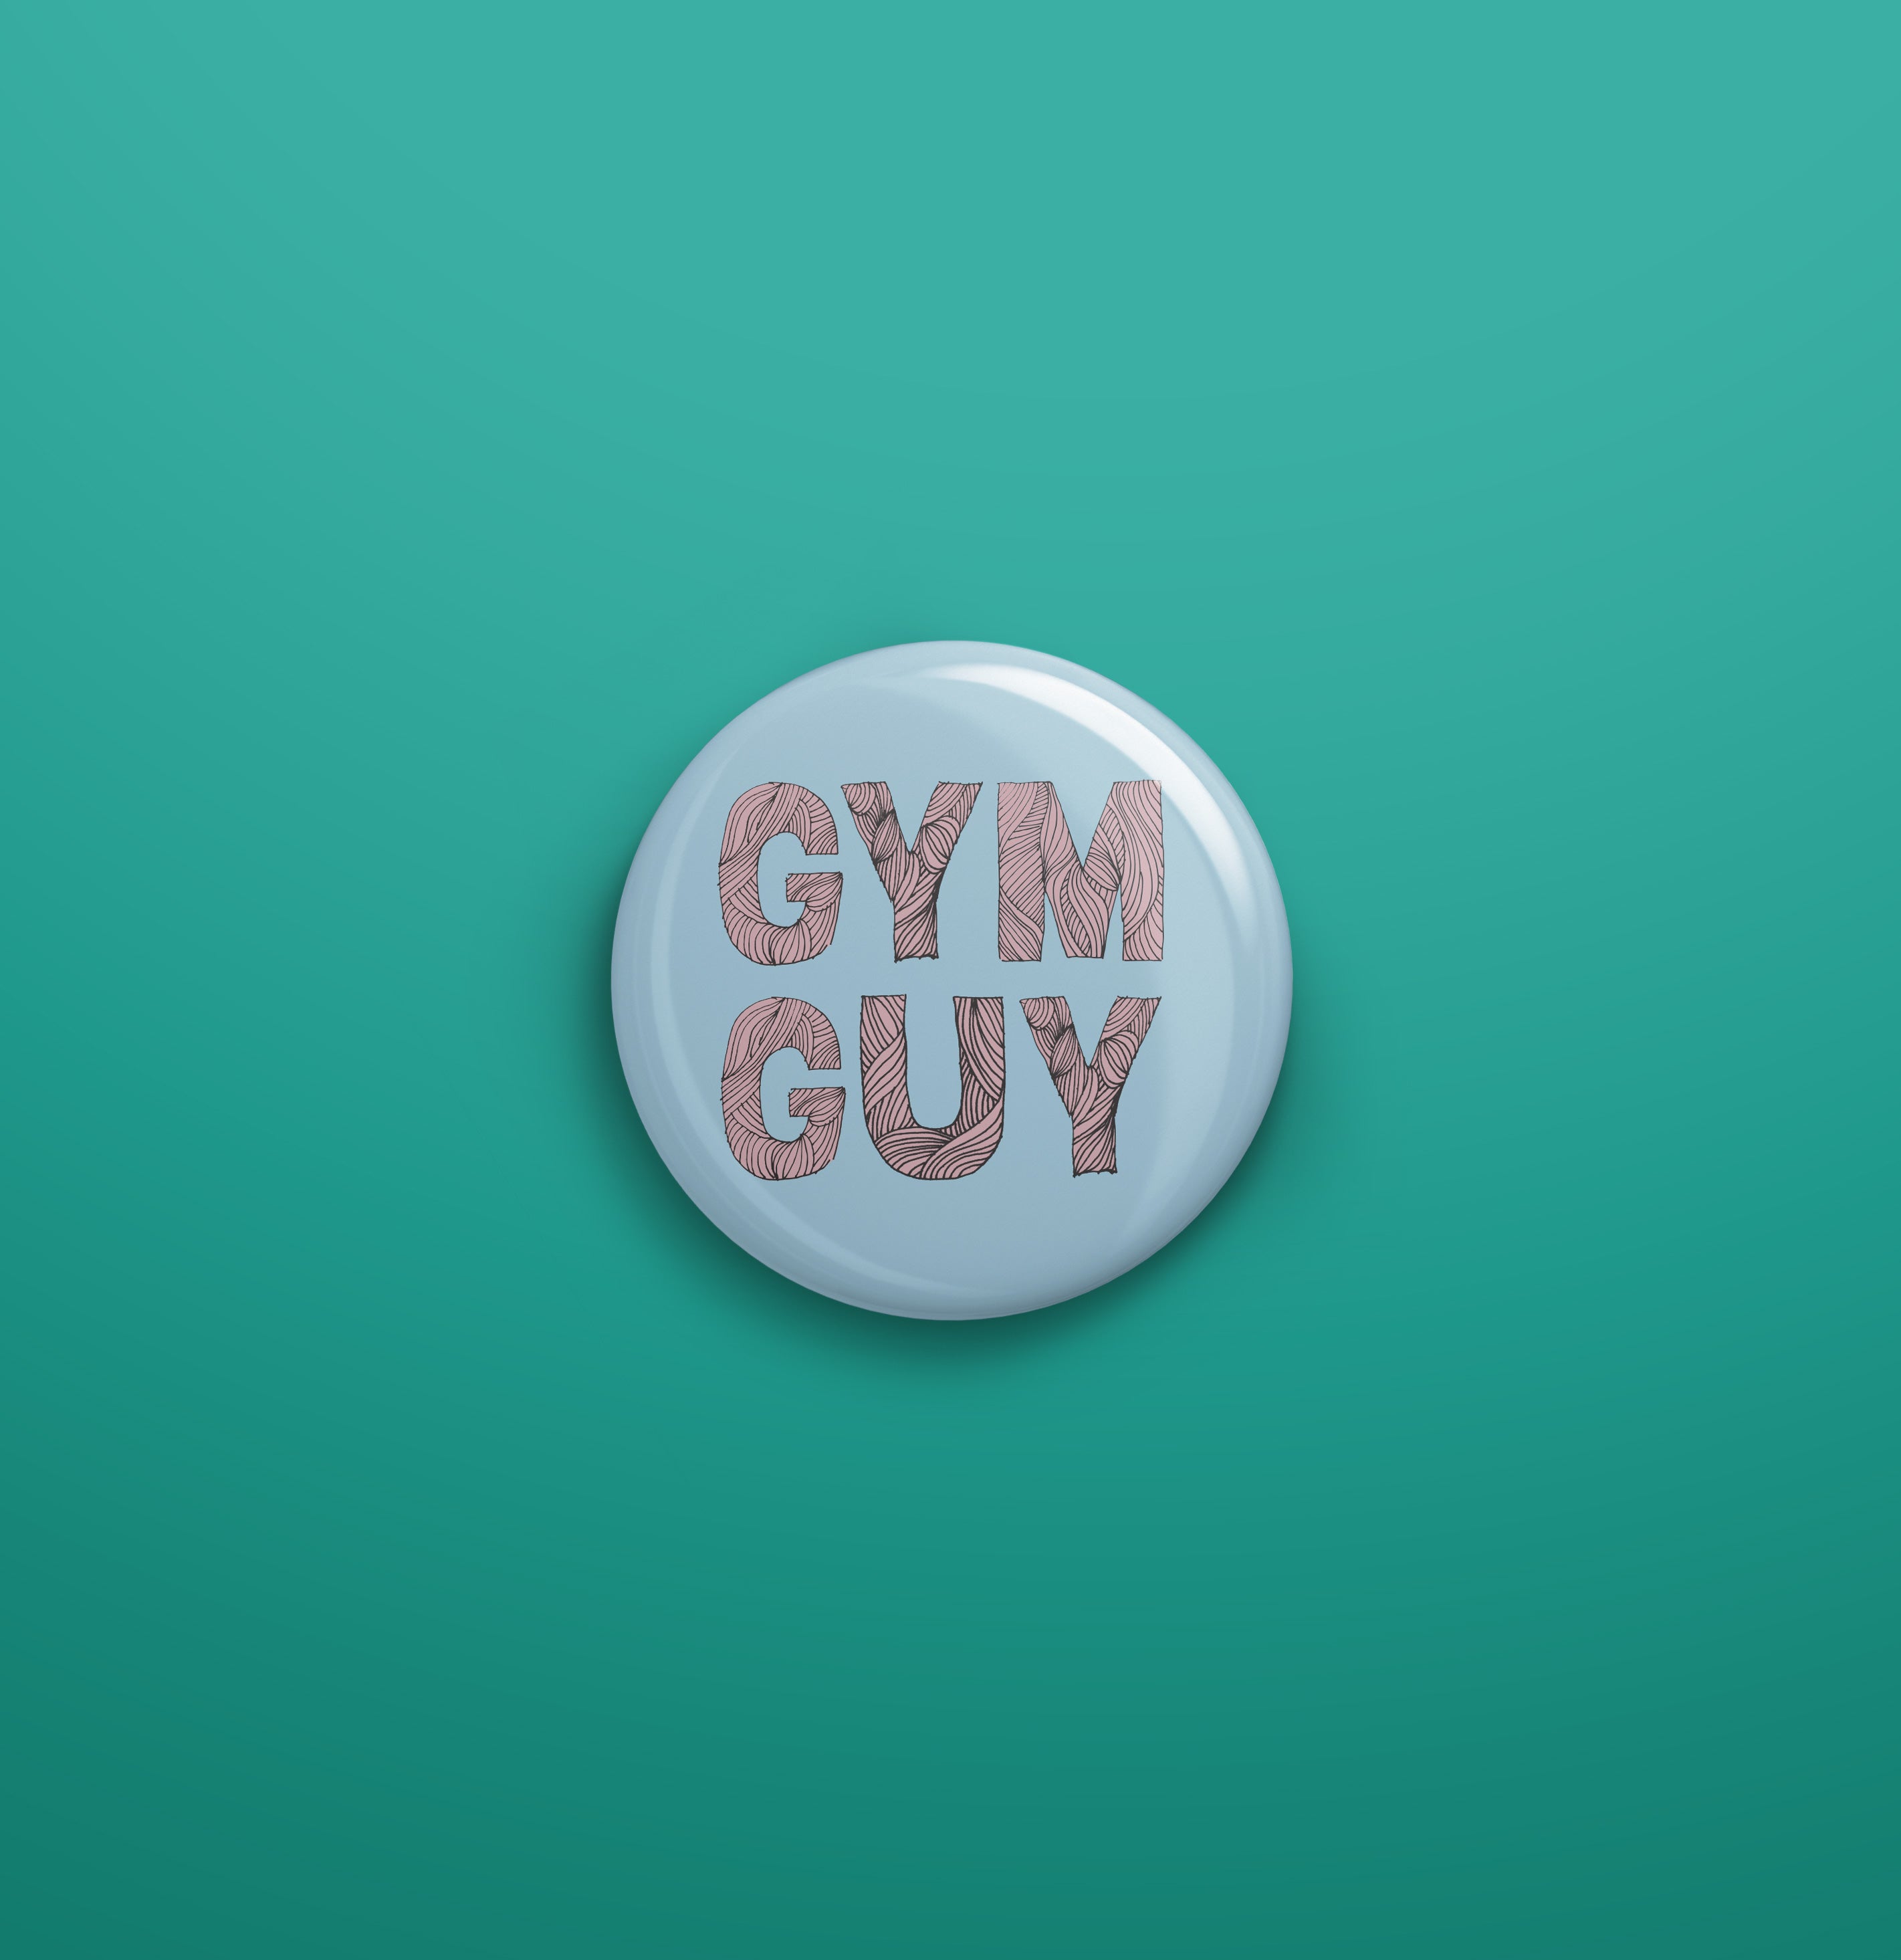 Gym guy